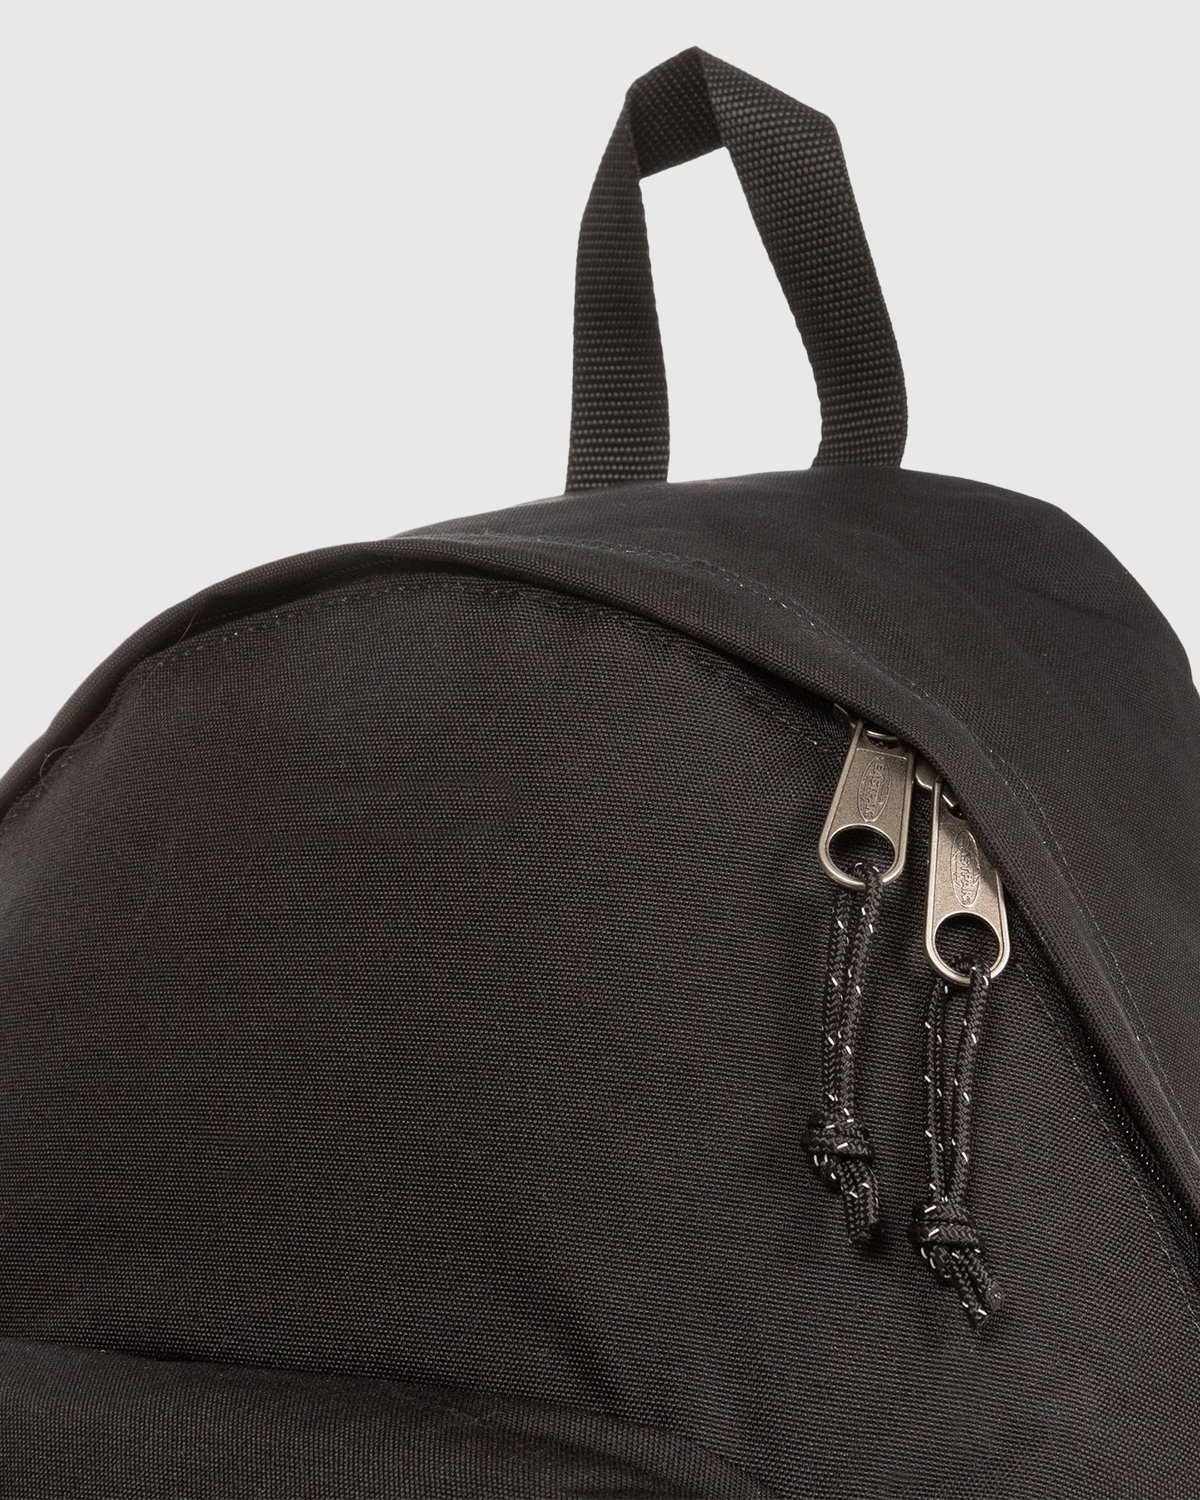 MM6 Maison Margiela x Eastpak - Padded Backpack Black - Accessories - Black - Image 6